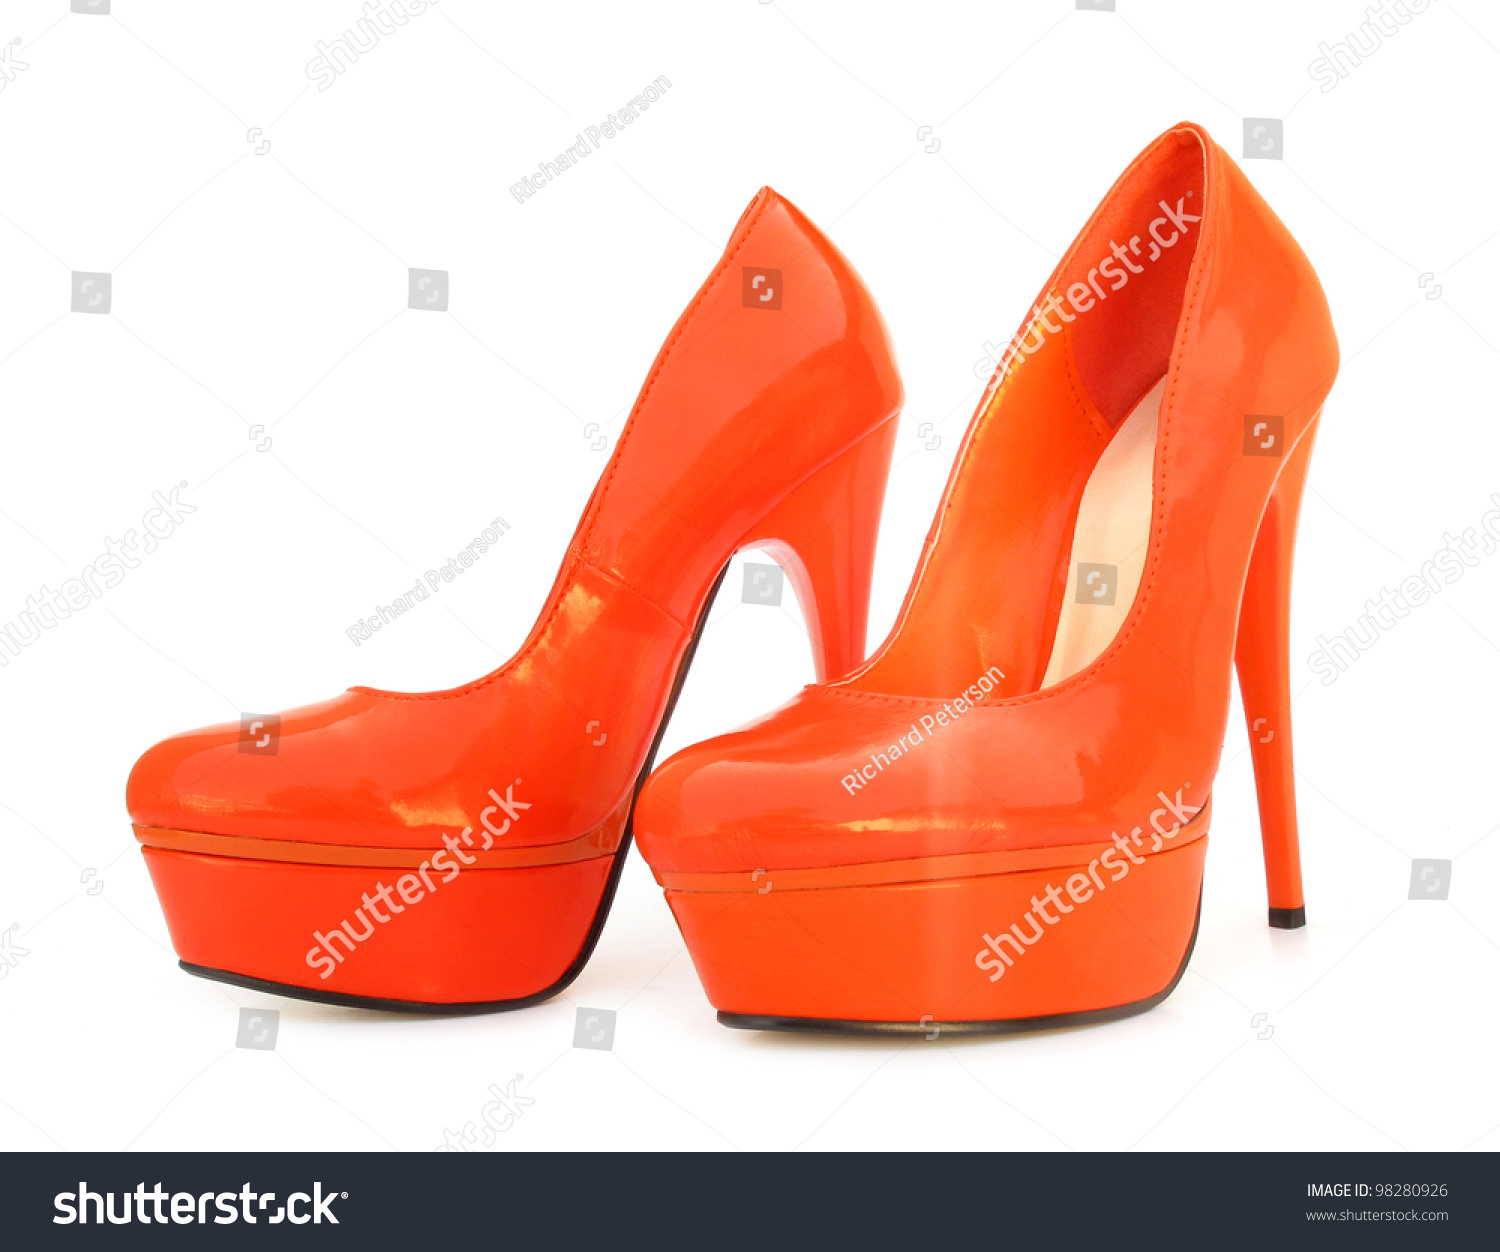 Orange High Heels Pump Shoes Stock Photo 98280926 : Shutterstock